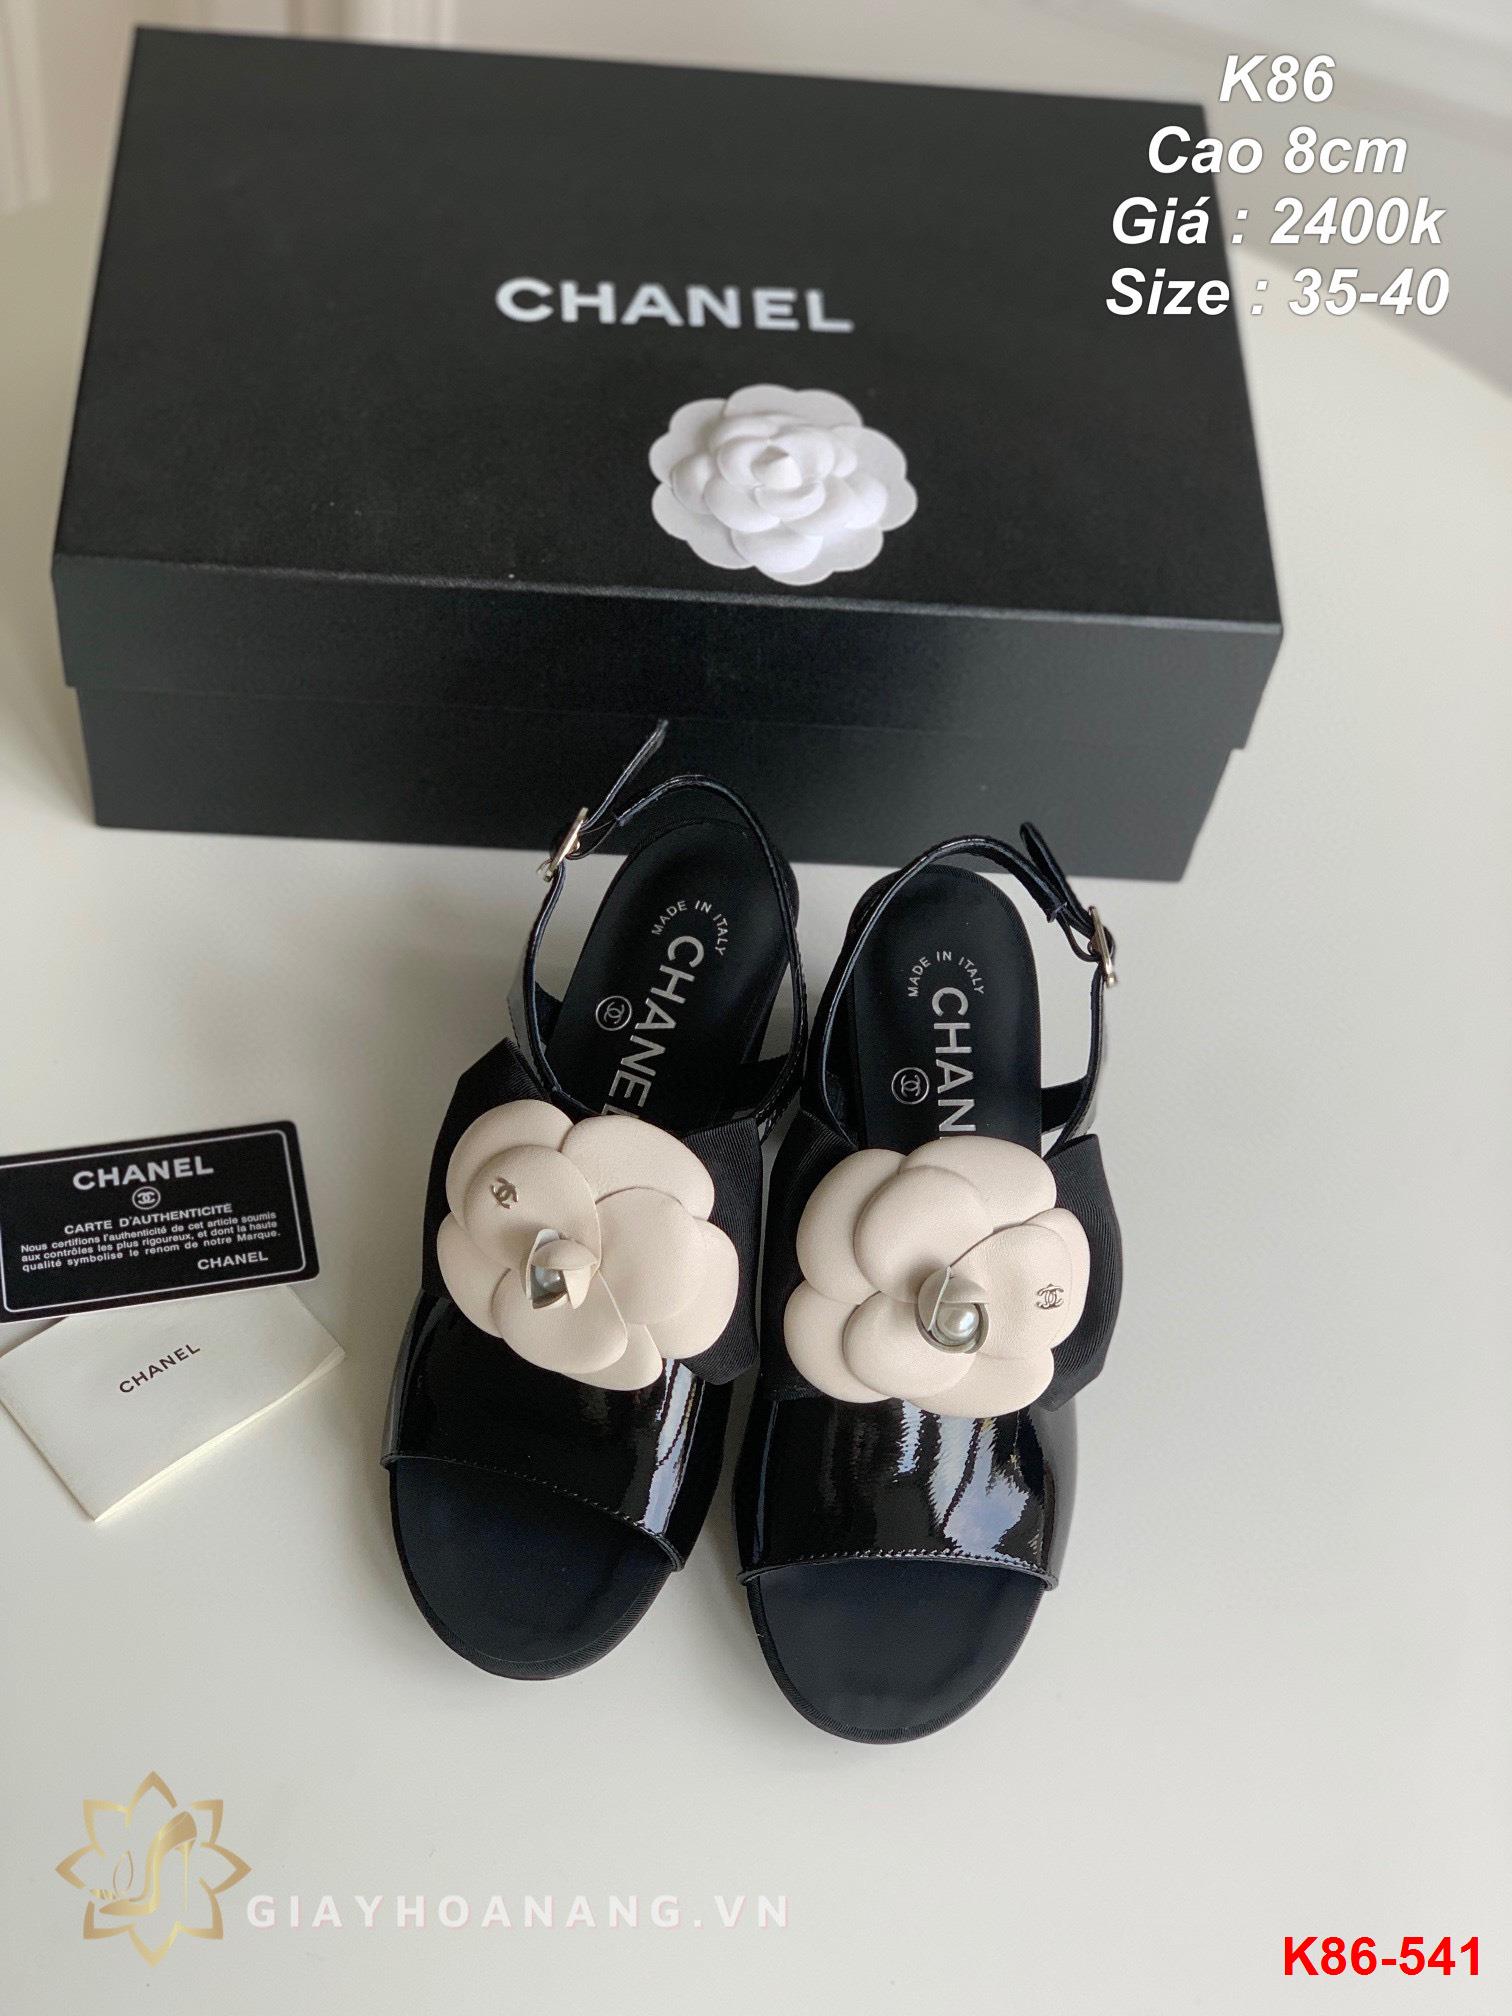 K86-541 Chanel sandal cao 7cm siêu cấp